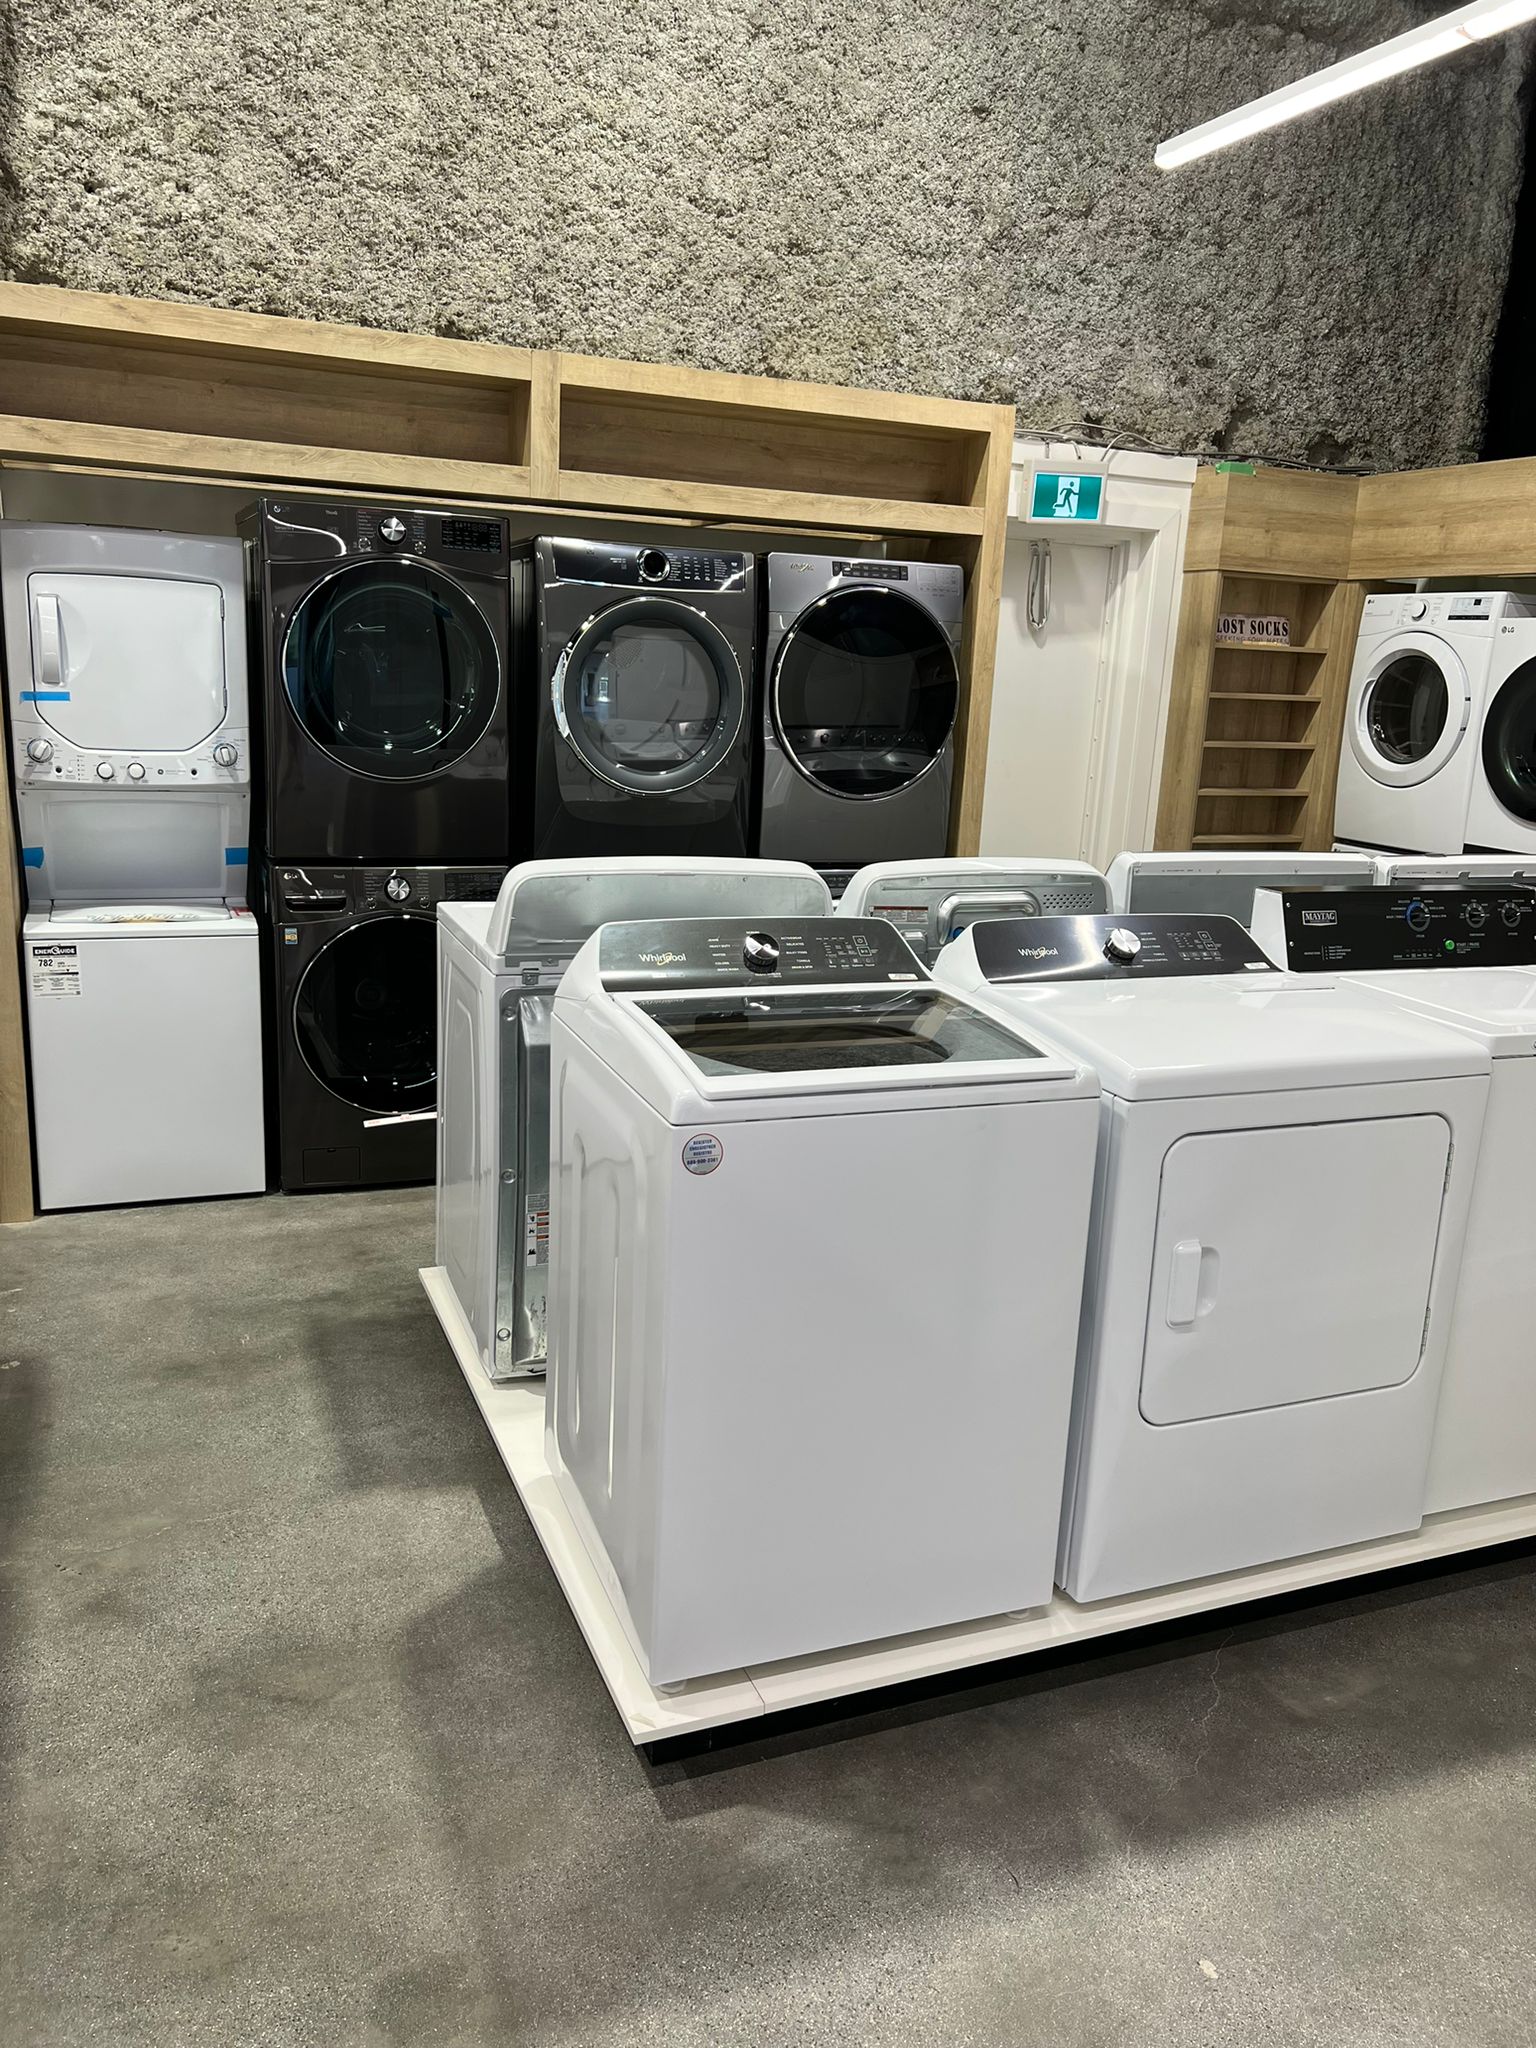 Handy Appliances Squamish